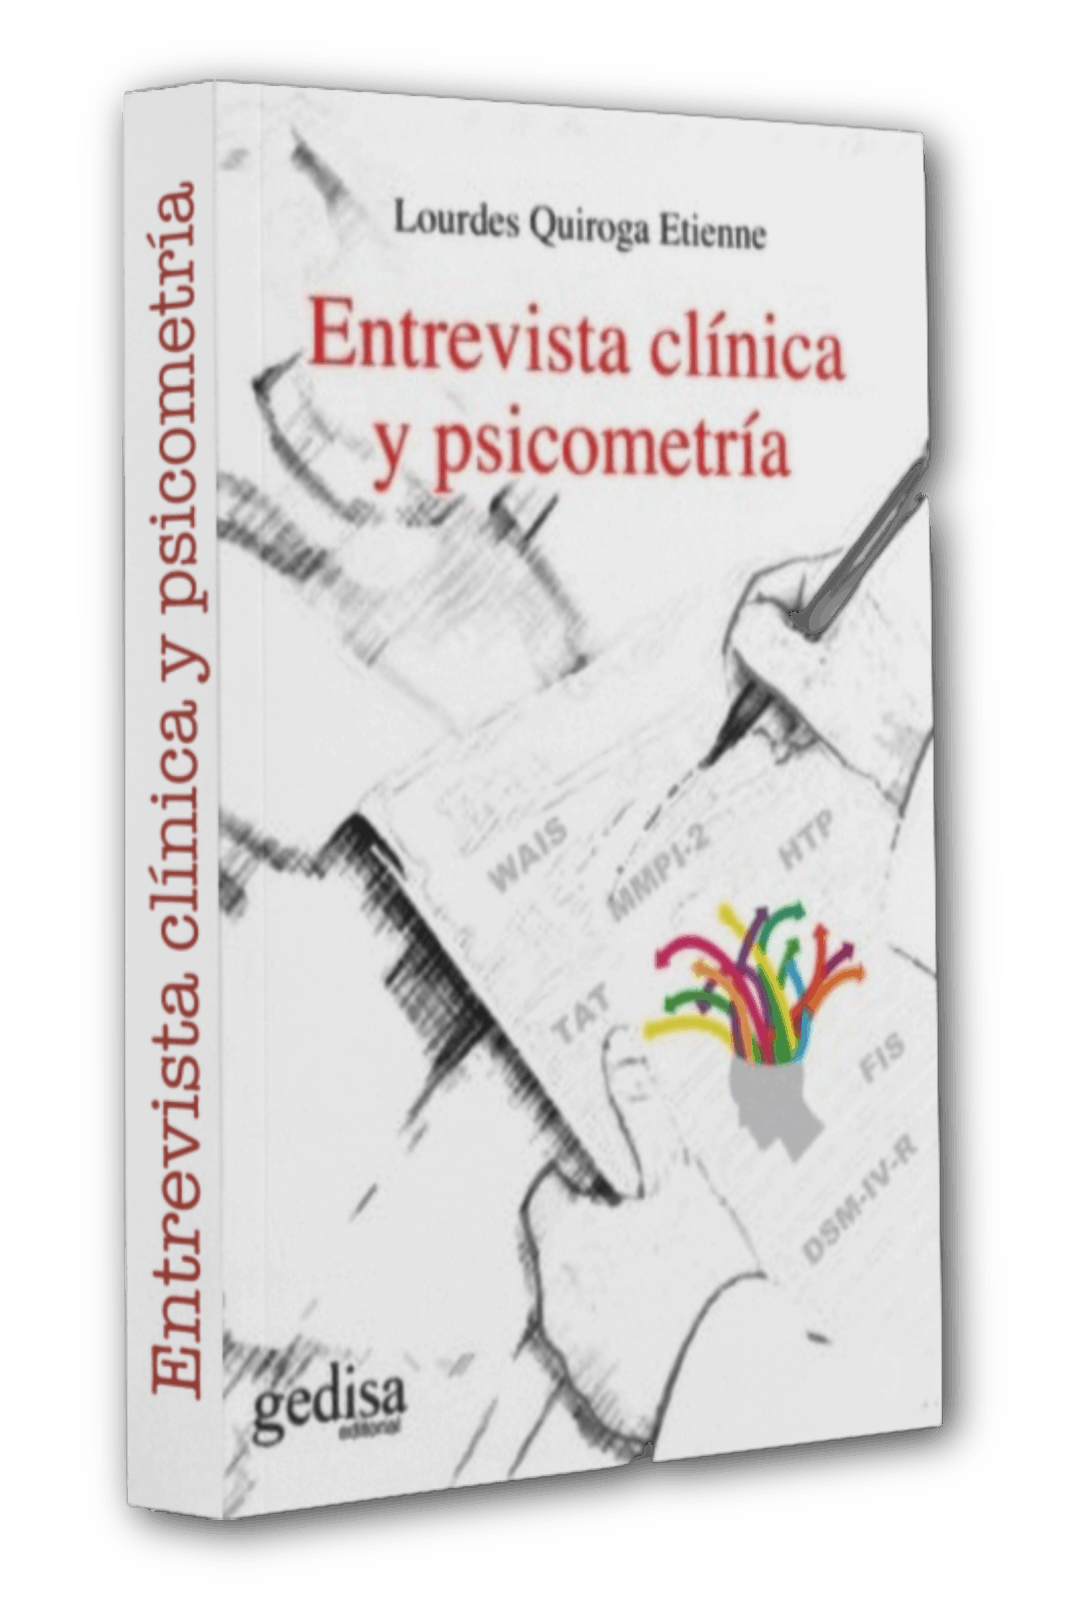 lourdes quiroga libro entrevista clinica 07 1067x1600 c - Dra. Lourdes Quiroga Etienne